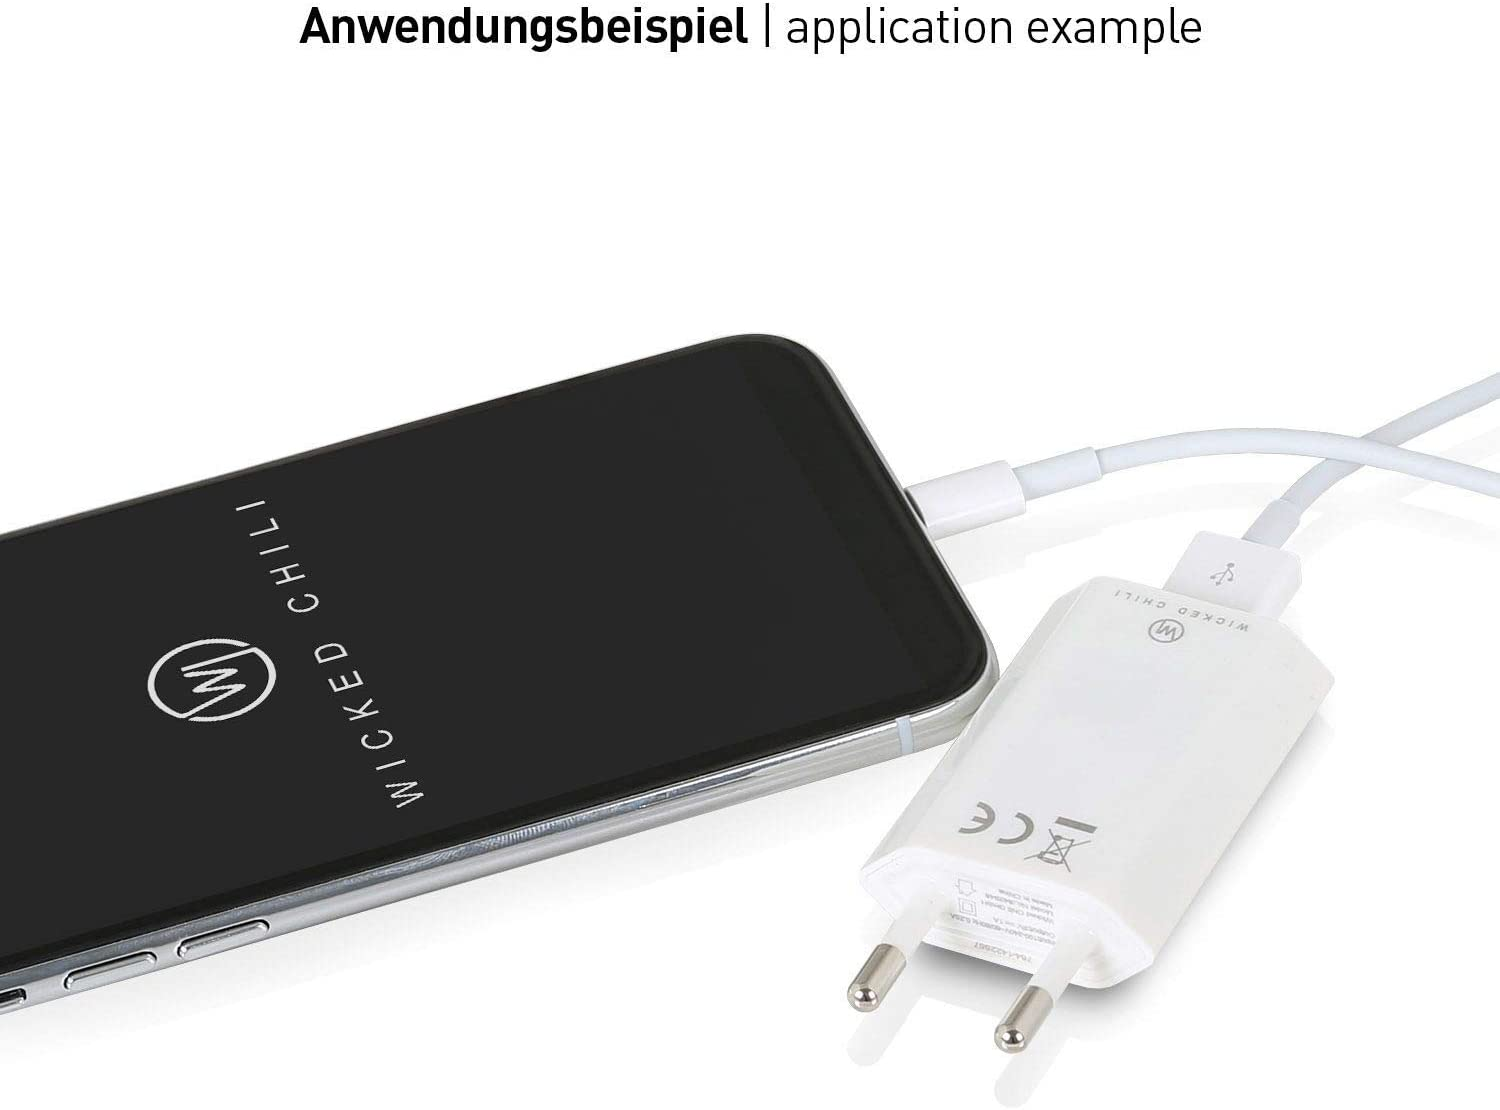 WICKED CHILI 1x Pro Adapter / Netzteil Lautsprecher Handy Series weiß Bluetooth Adapter USB 5W Power (1A) Ladegerät USB